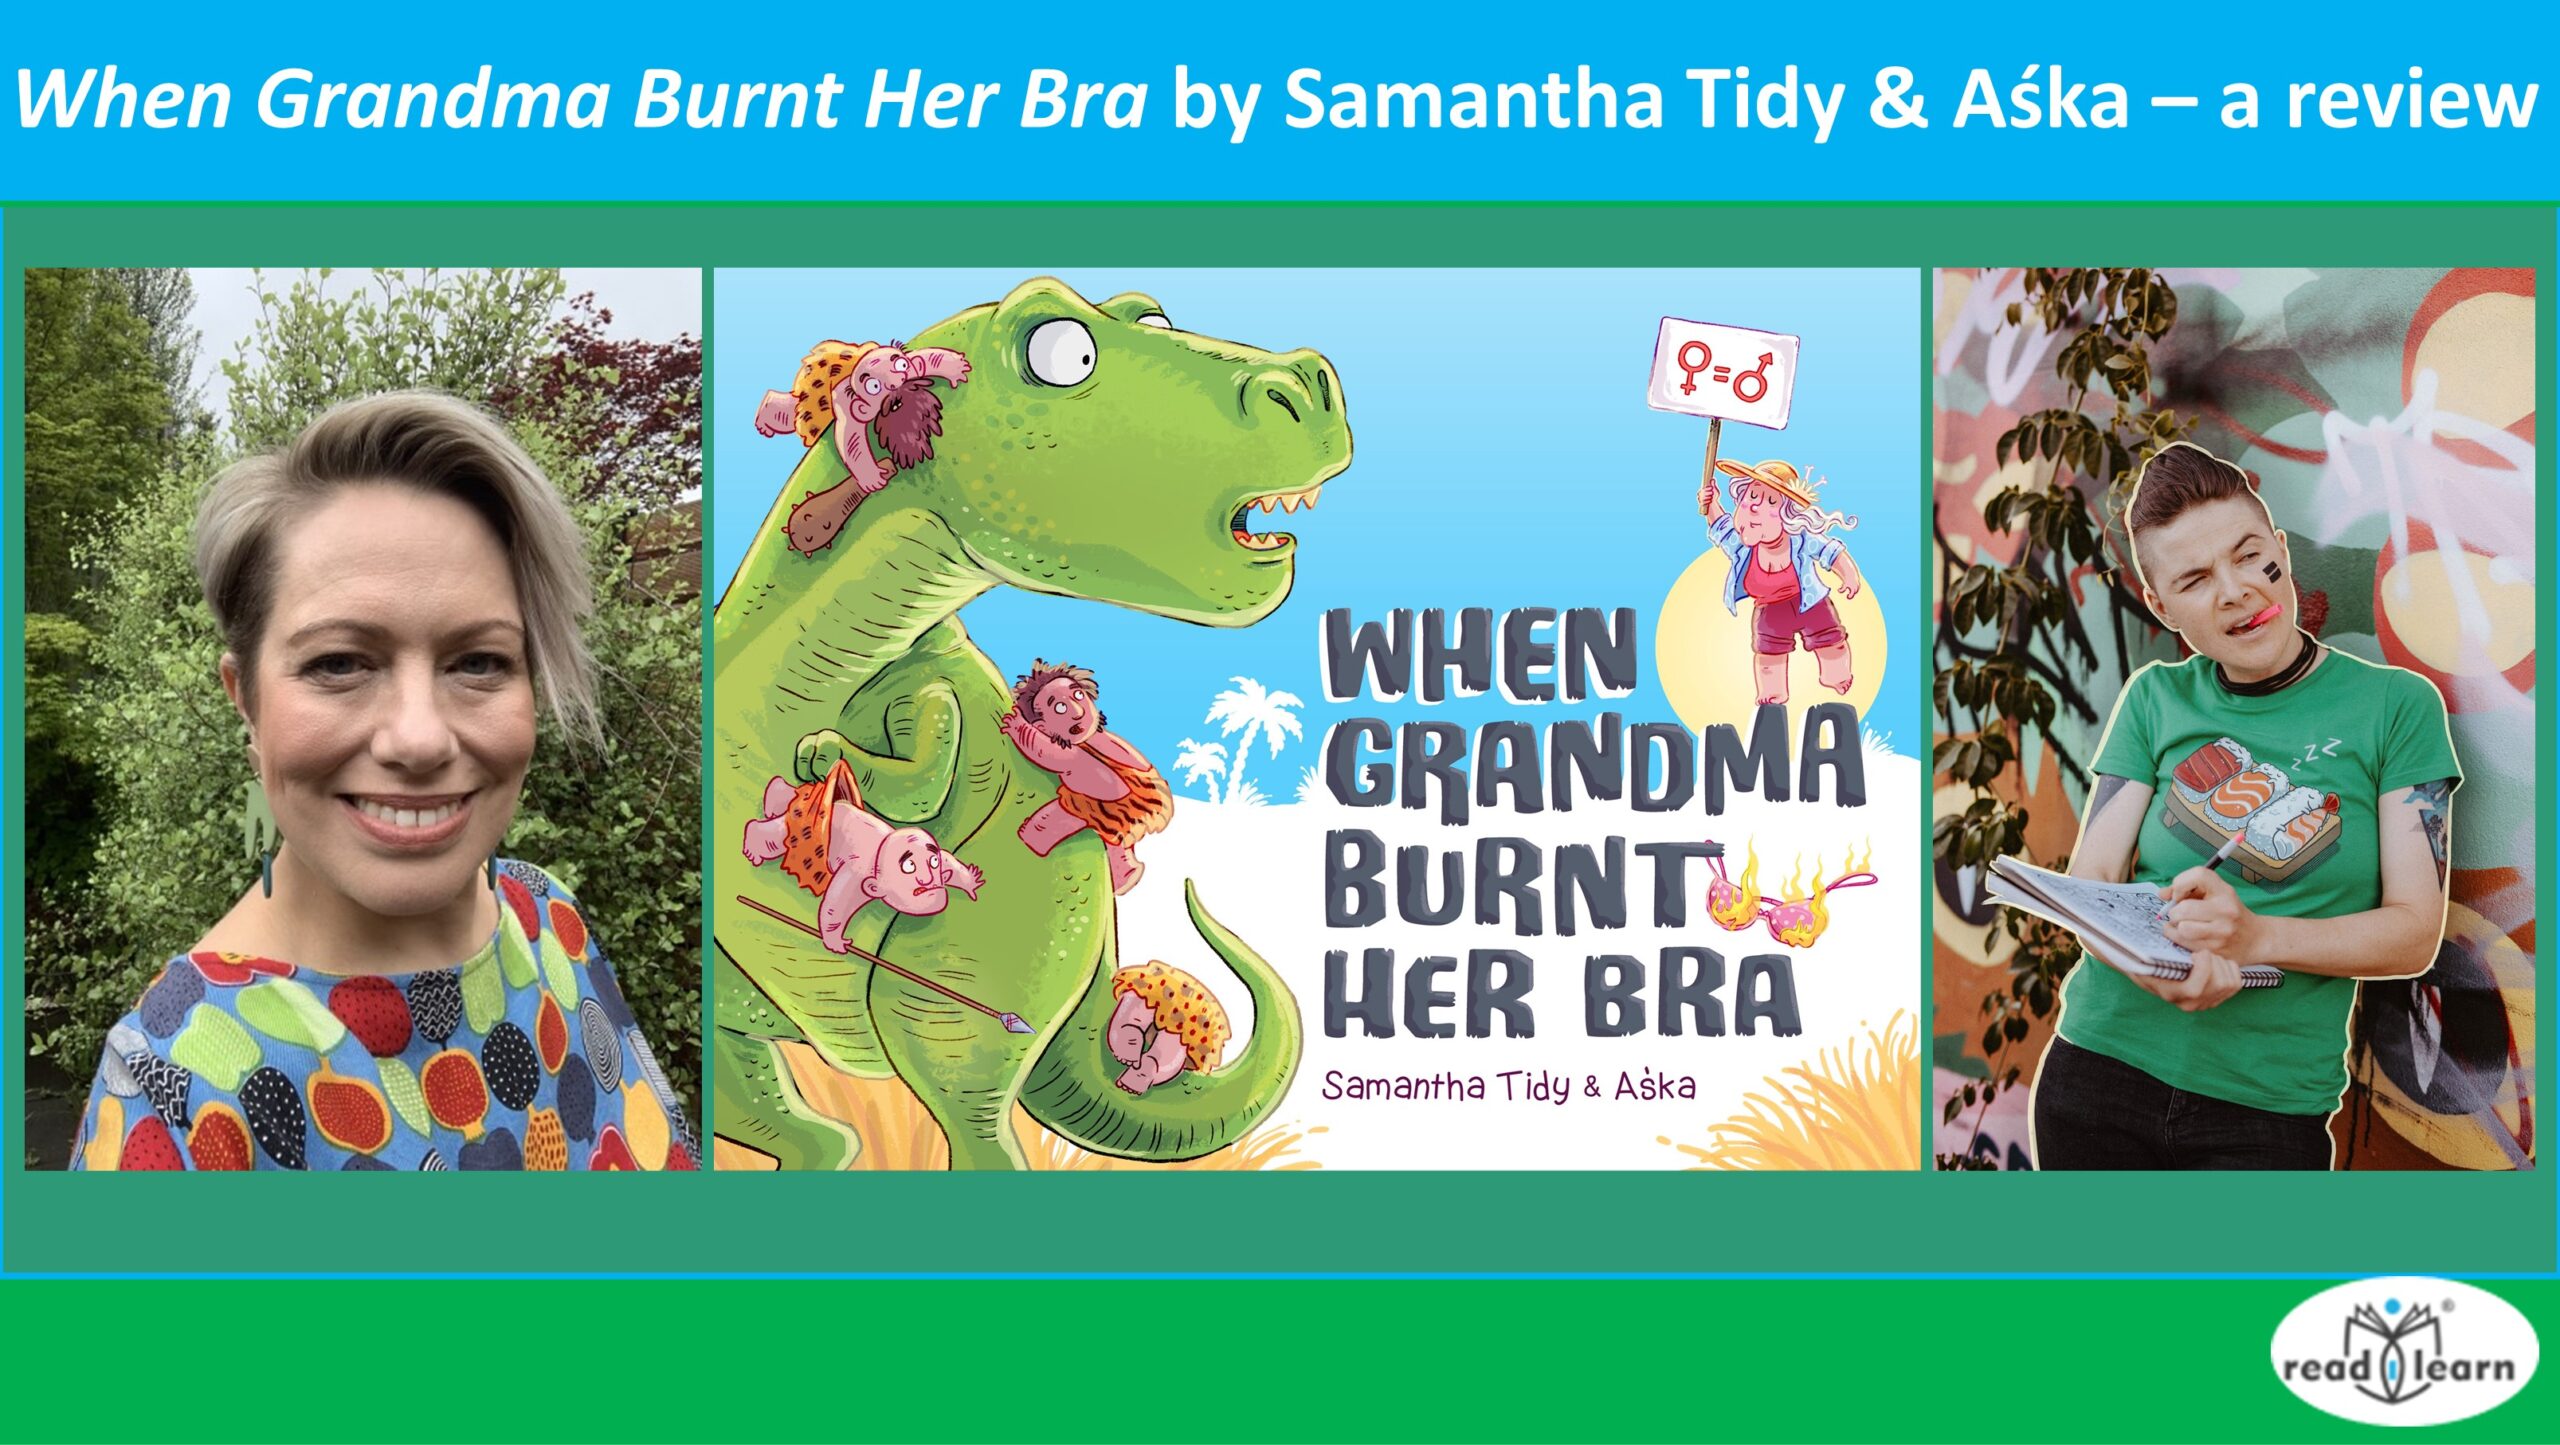 When Grandma Burnt Her Bra by Samantha Tidy & Aśka – a review –
#readilearn